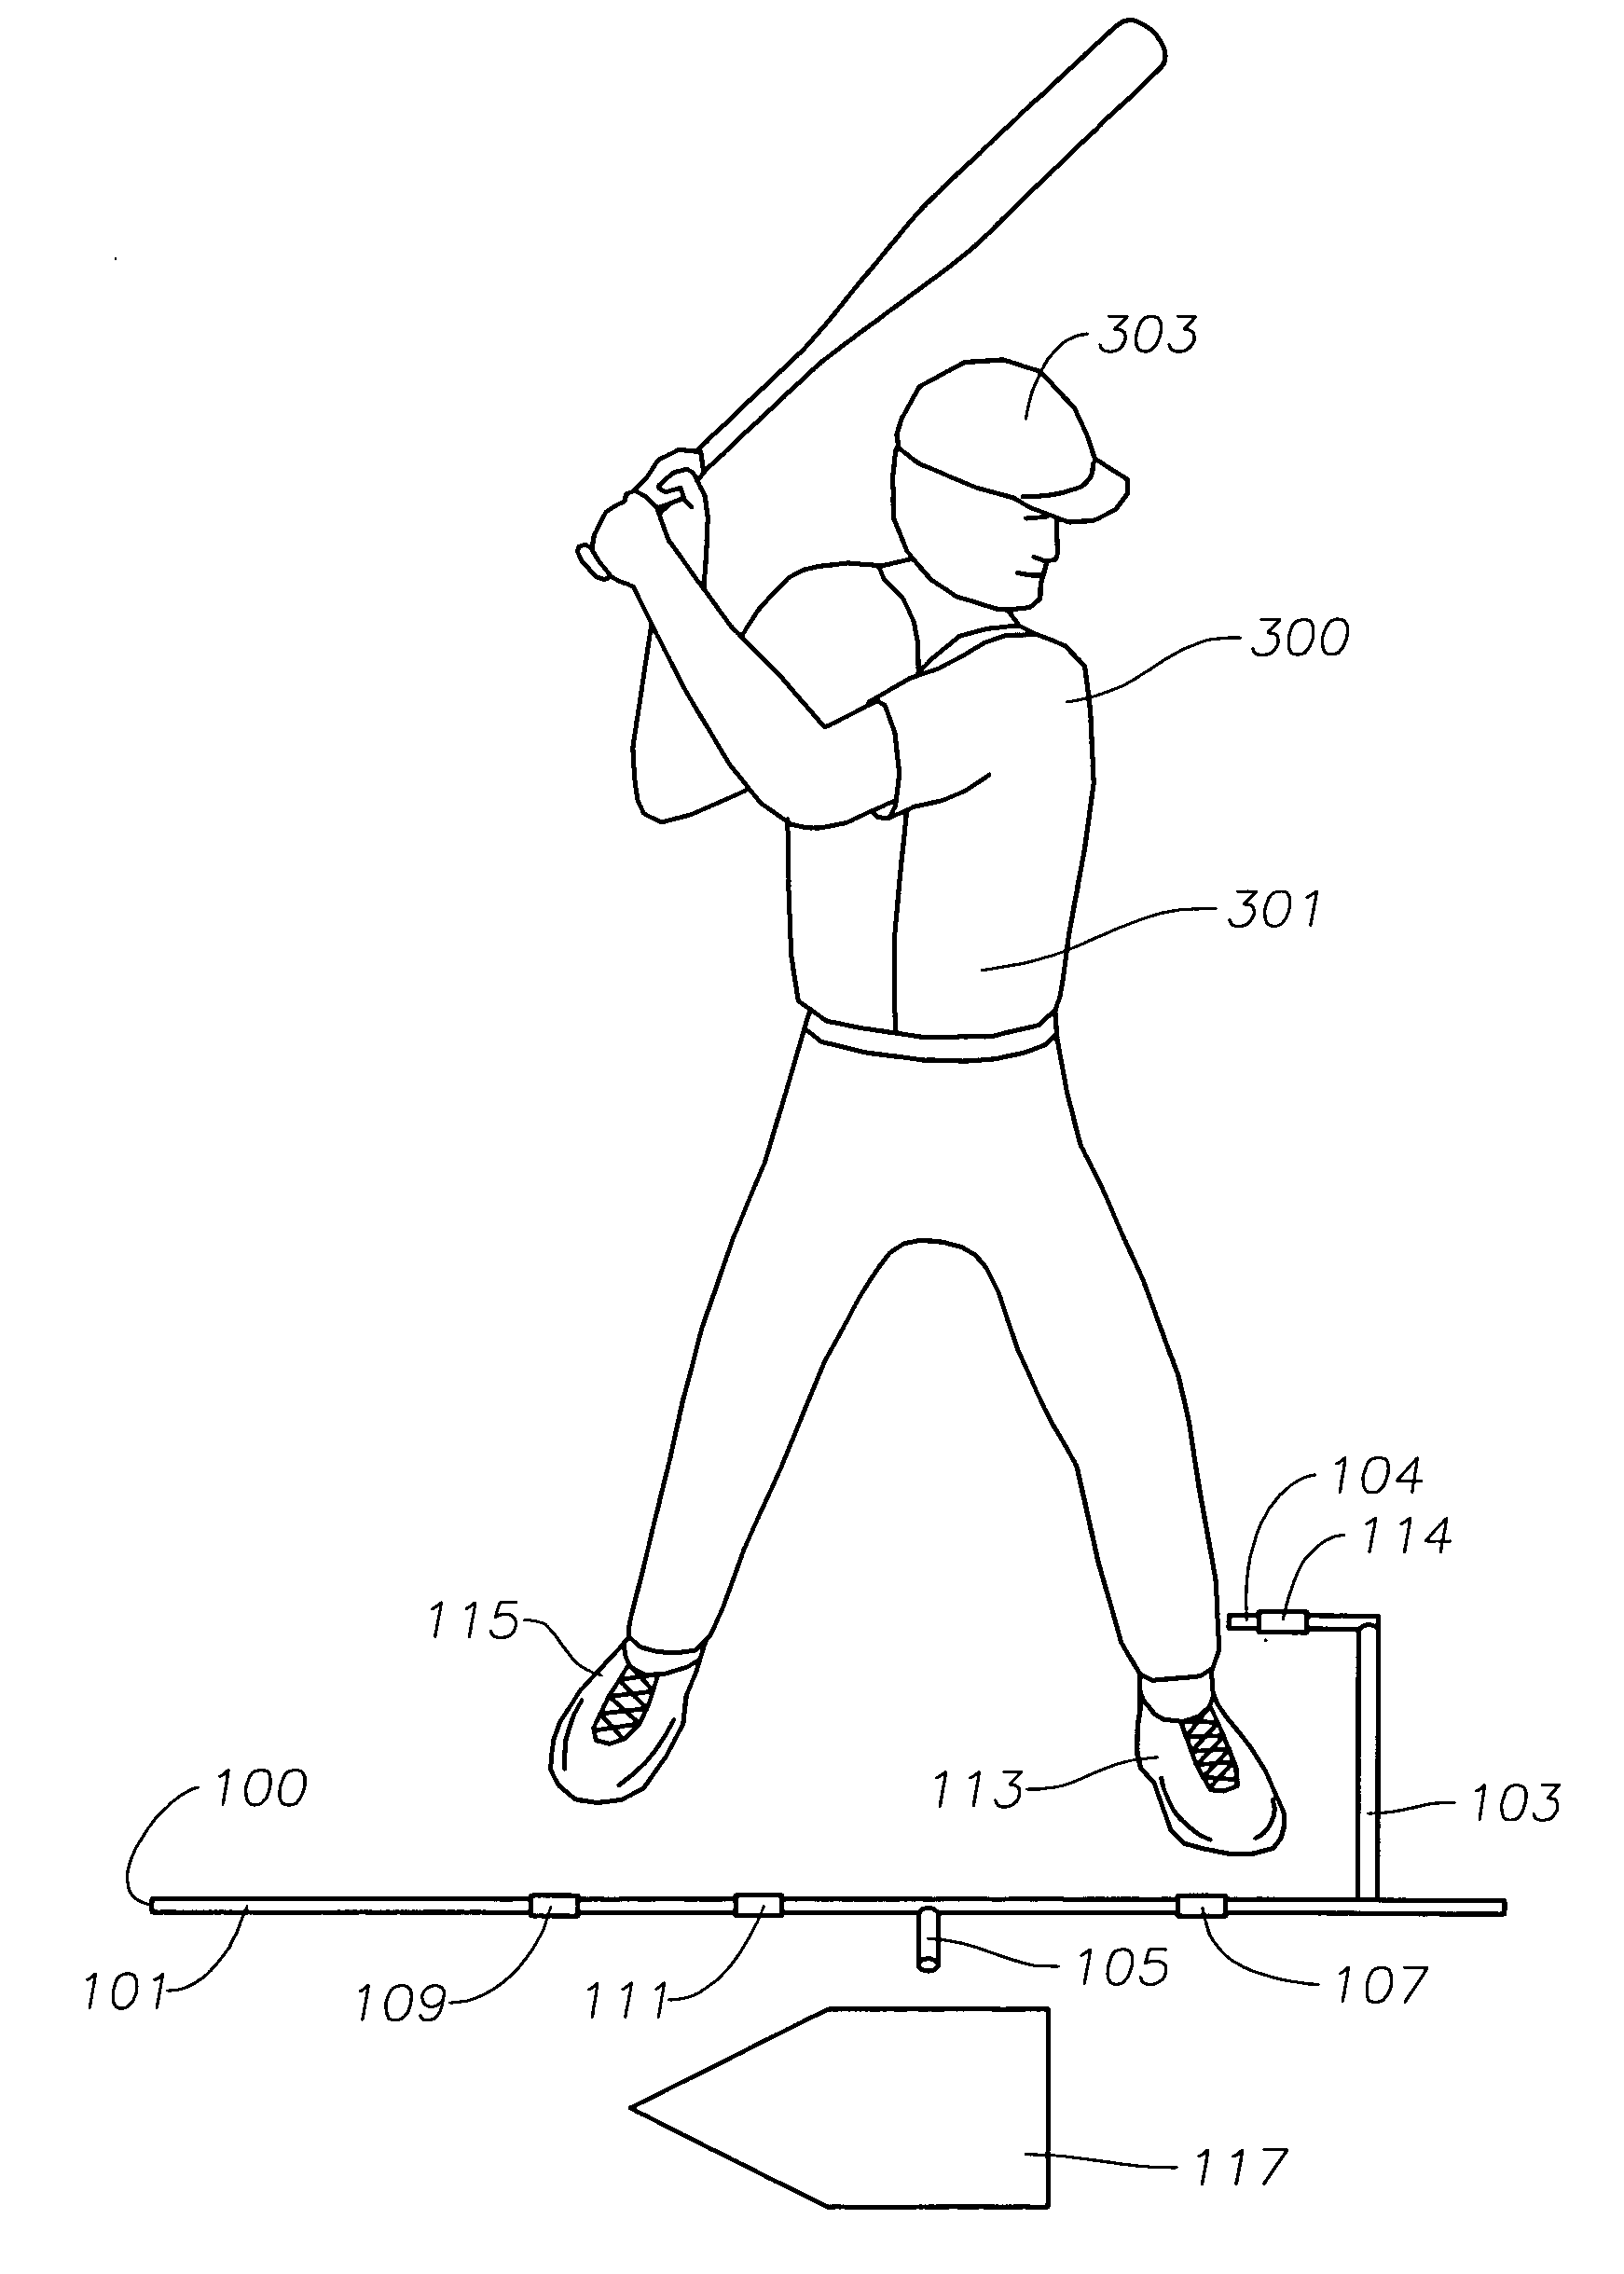 Apparatus and methods for improving batting skills